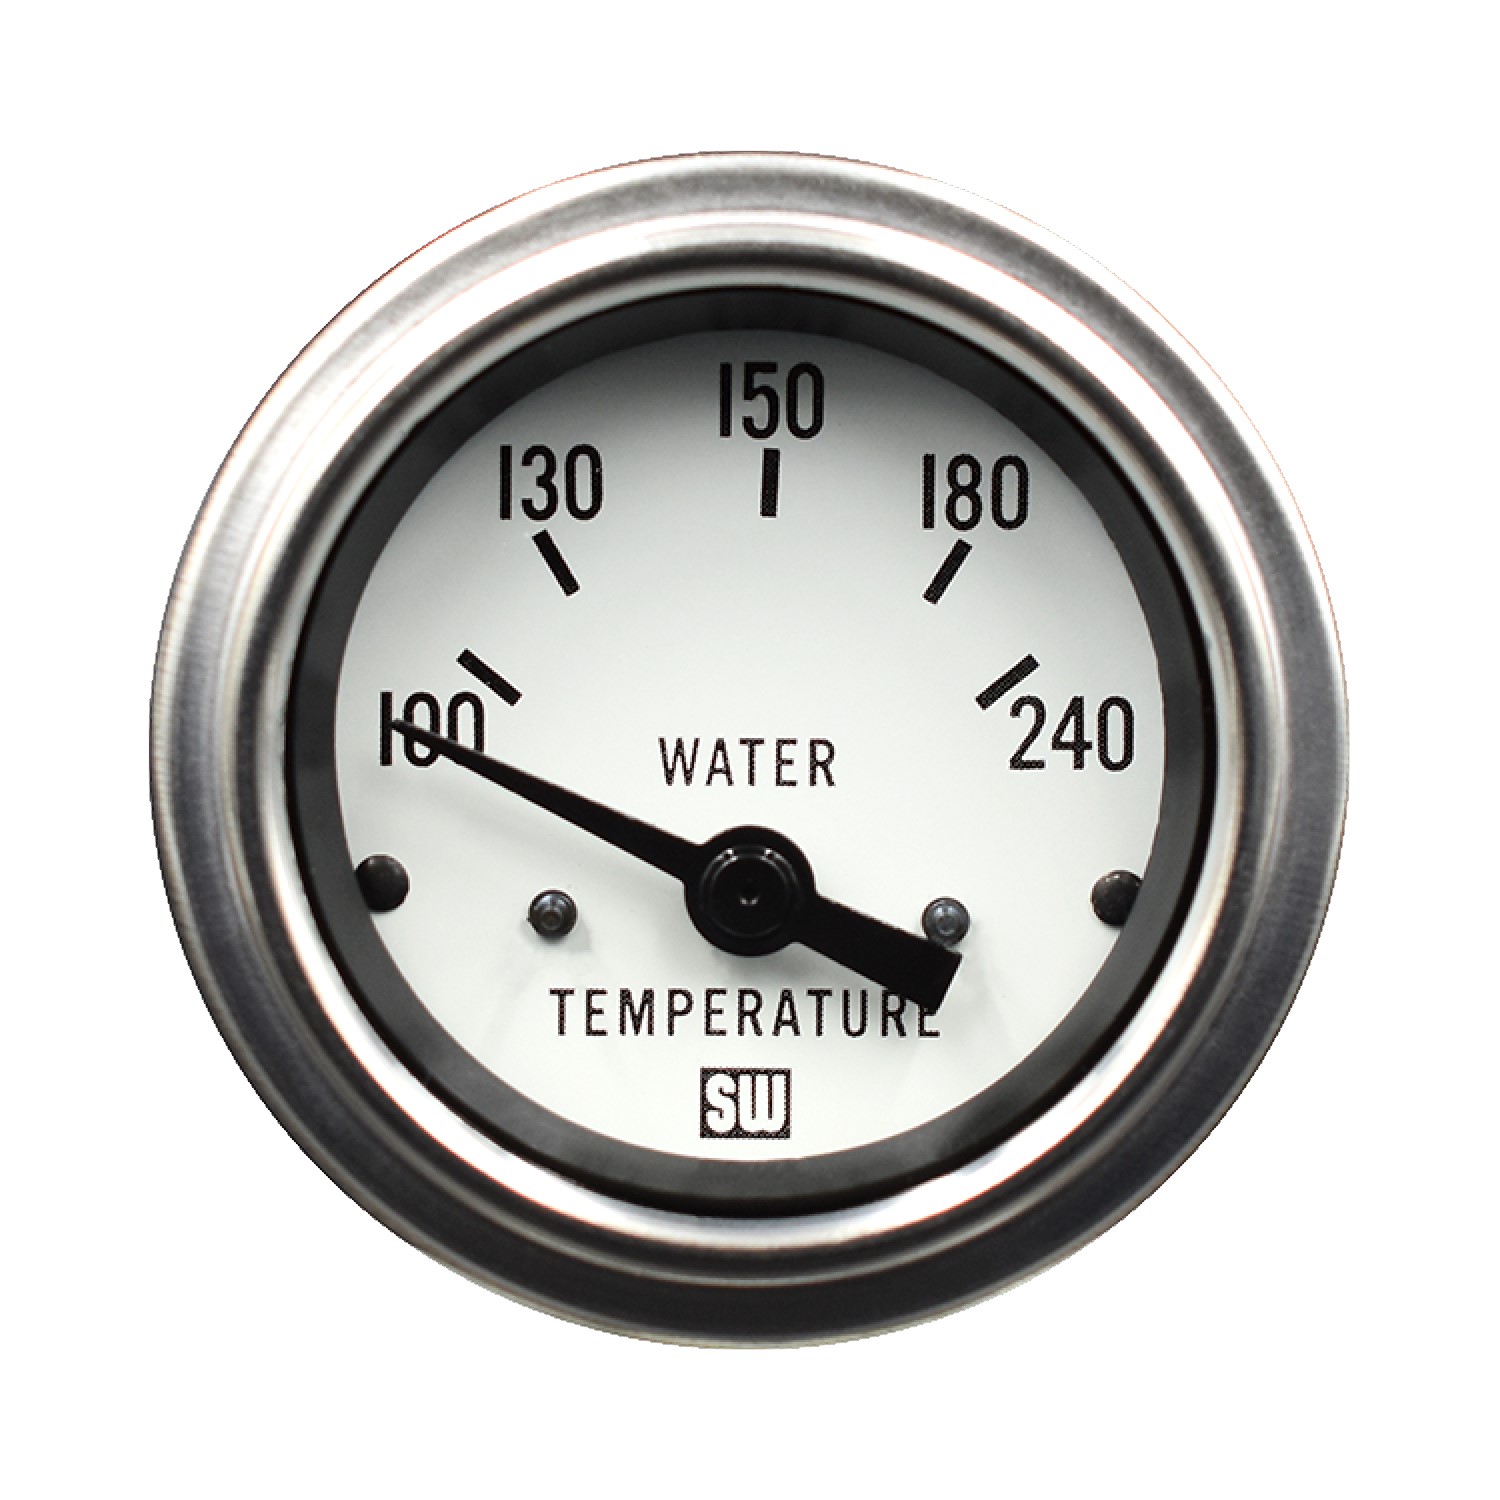 Deluxe™ Water Temperature Gauge 82326-120 - Stewart Warner